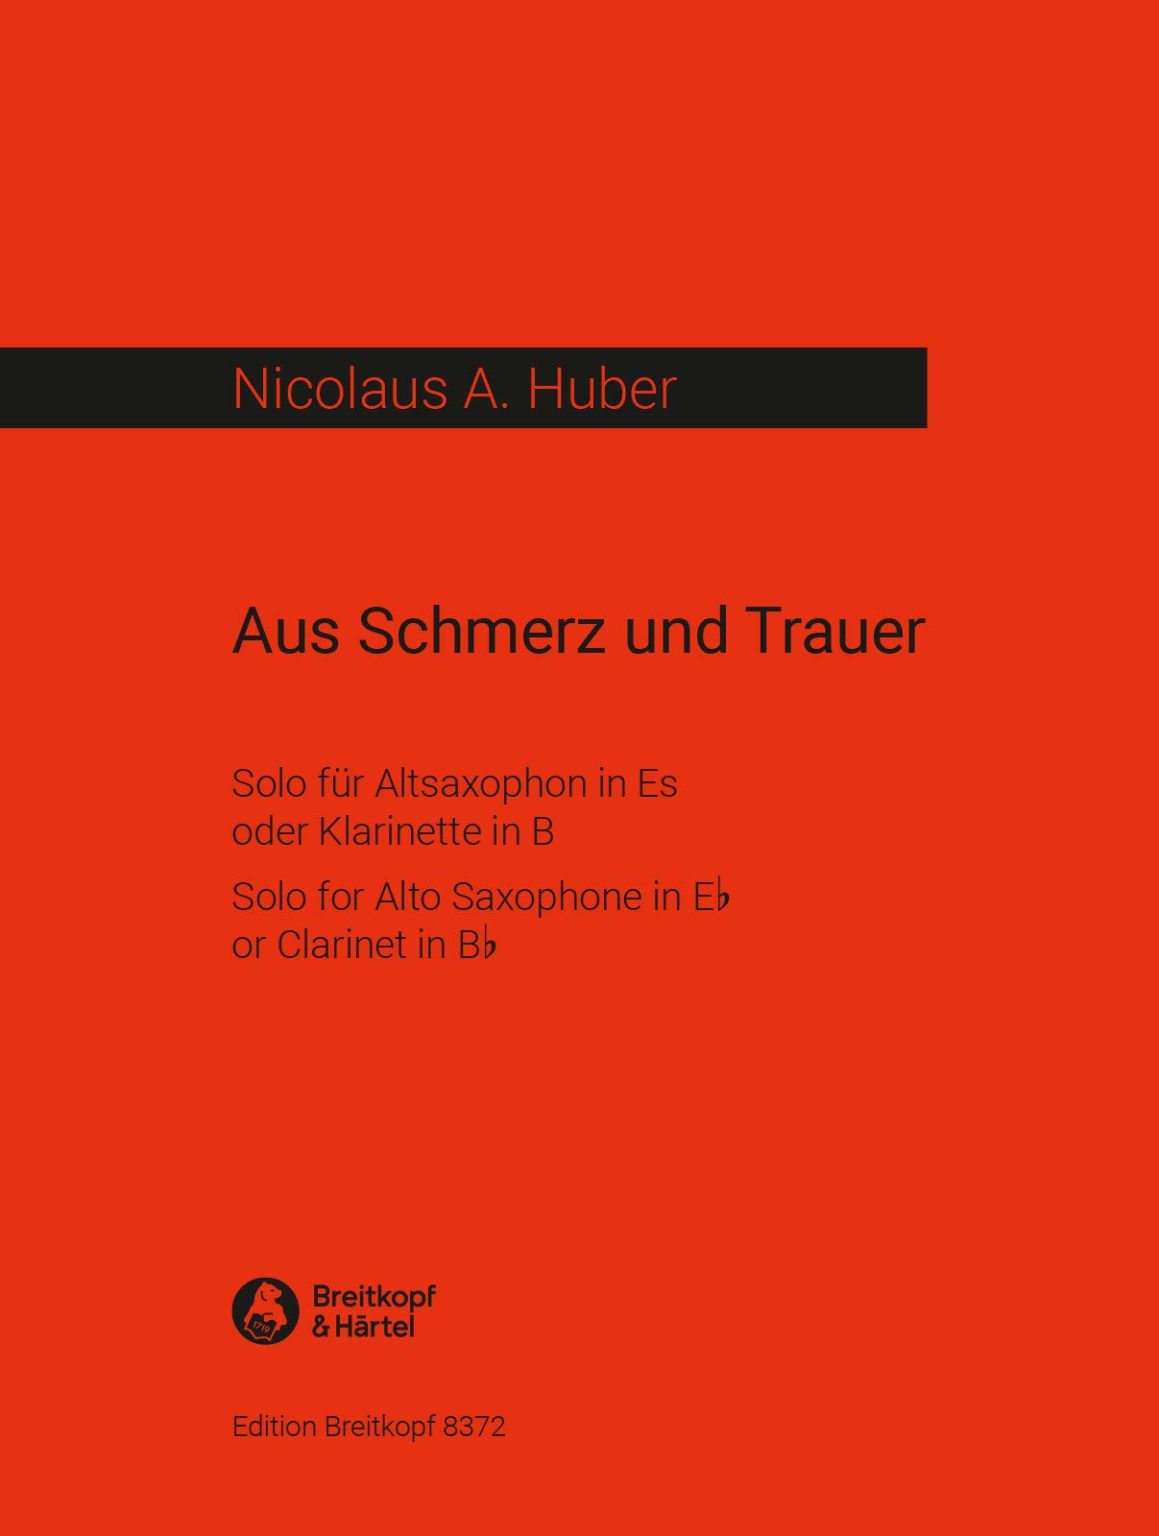 Aus Schmerz und Trauer (1982) para saxofón alto o clarinete. Nicolaus A. Huber